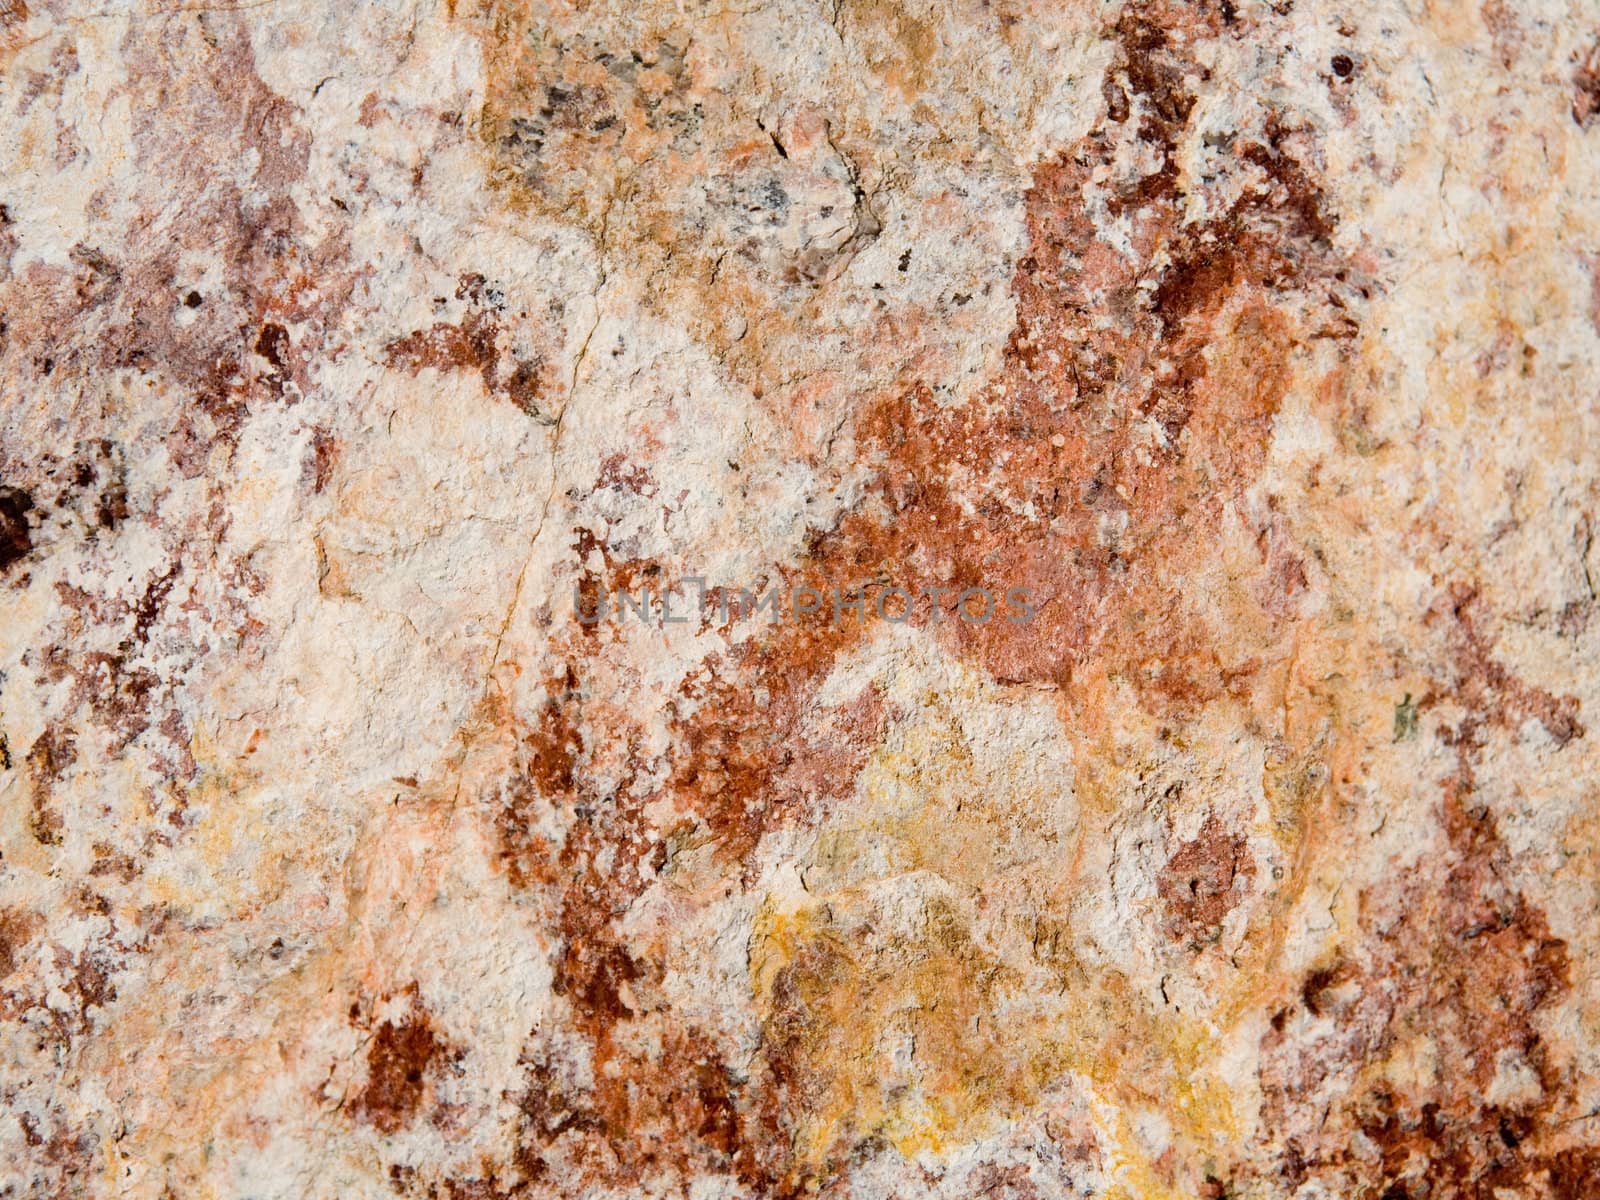 Rock surface texture